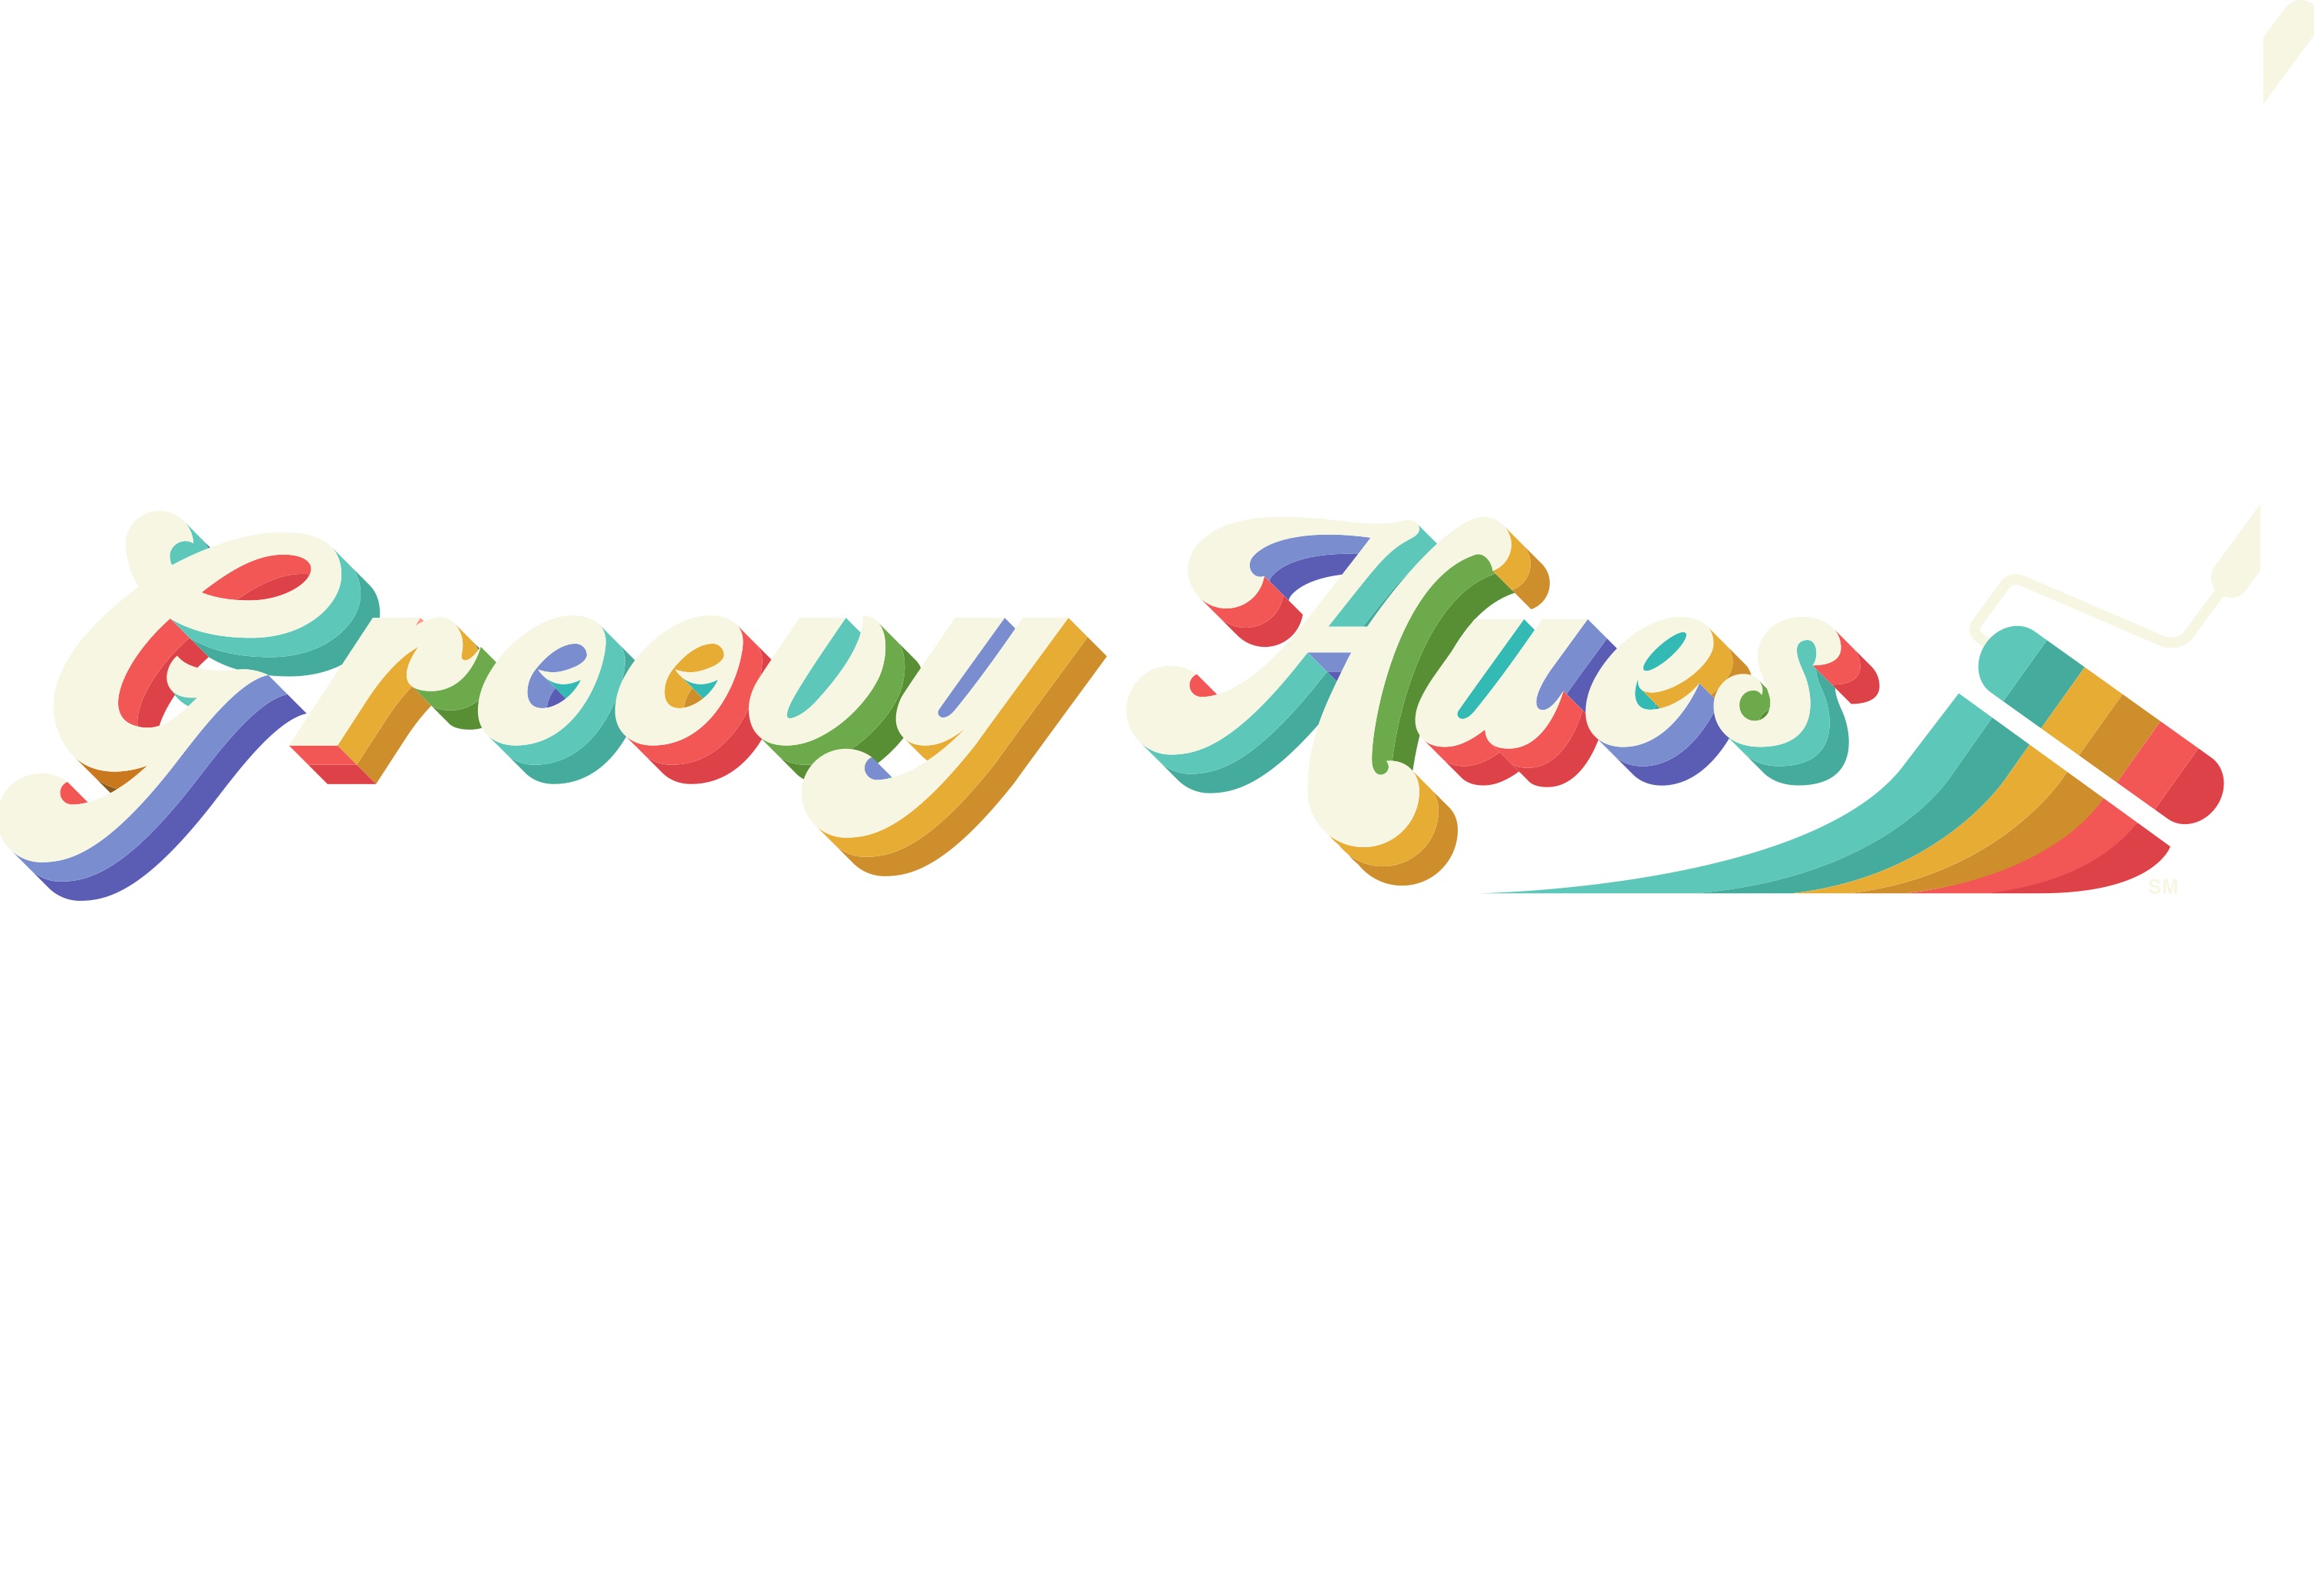 Groovy-logo2-4.jpg